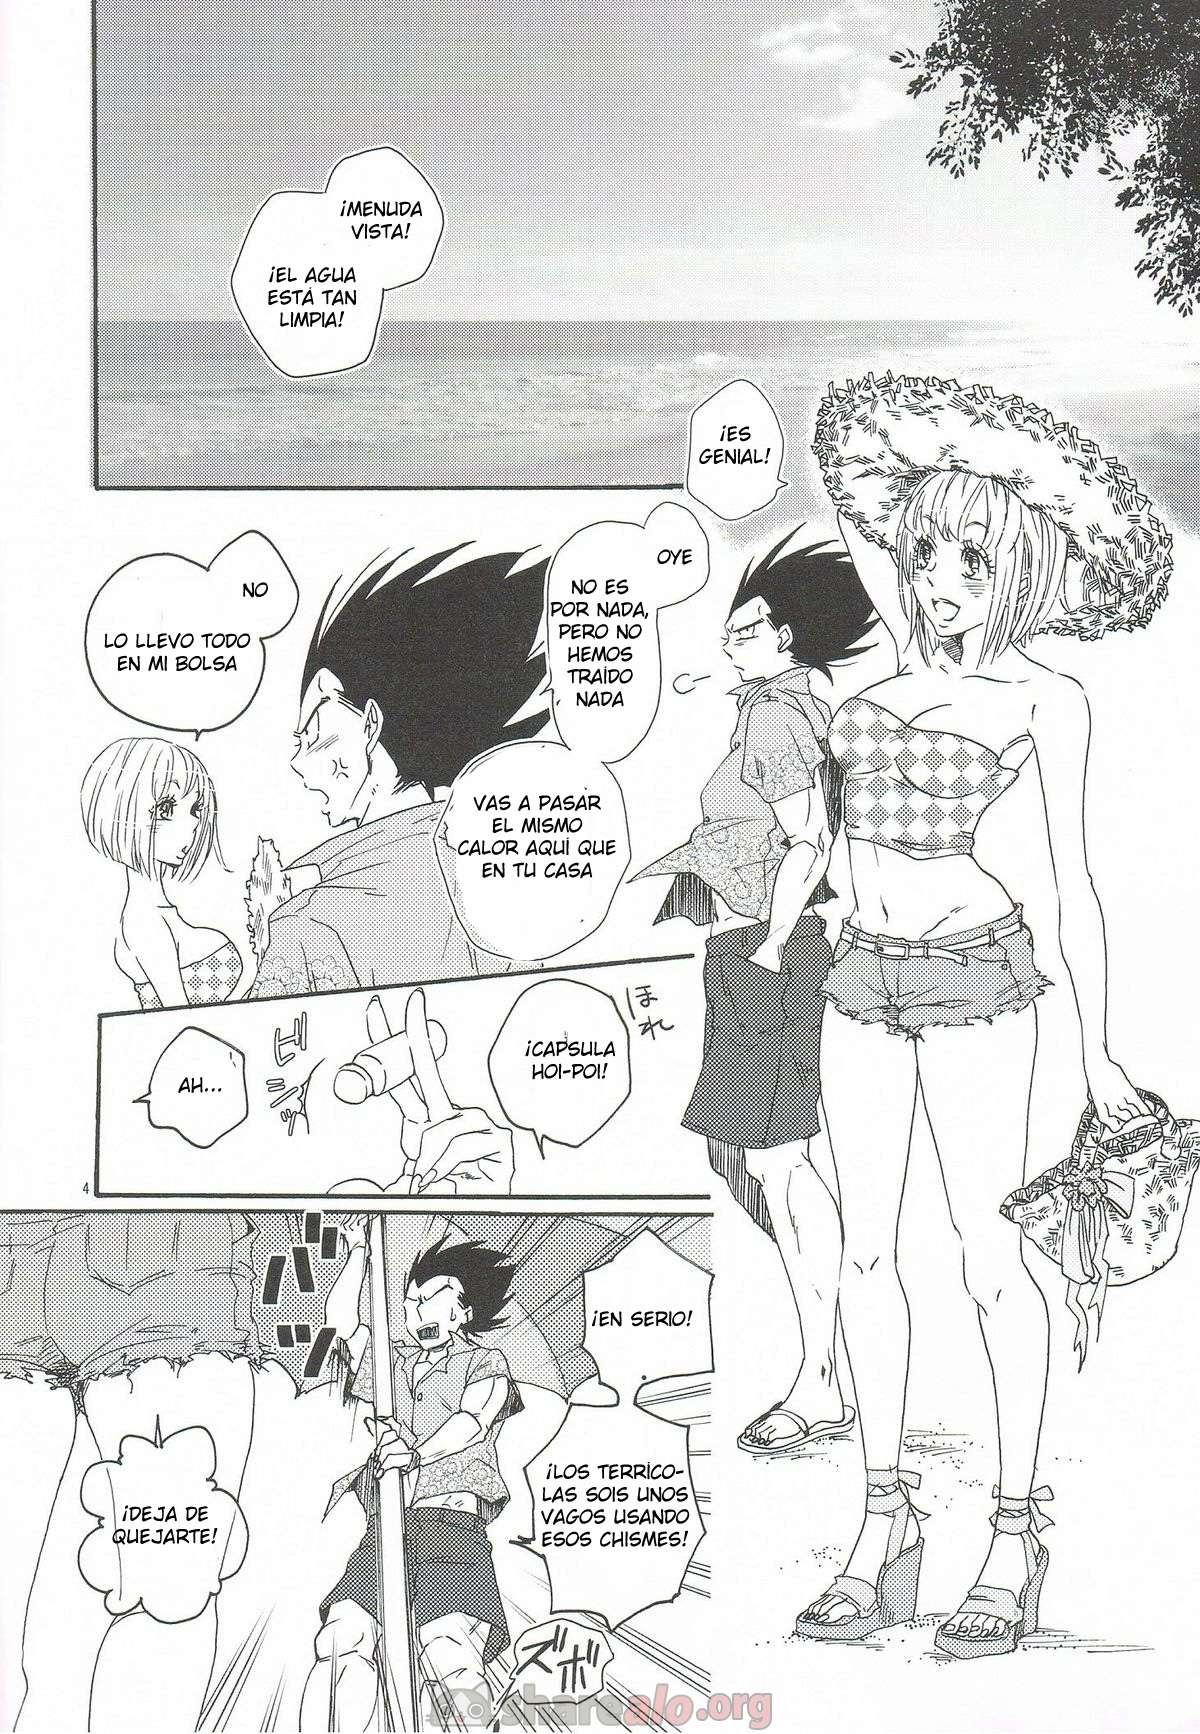 Summer (Verano) DBZ - 3 - Comics Porno - Hentai Manga - Cartoon XXX